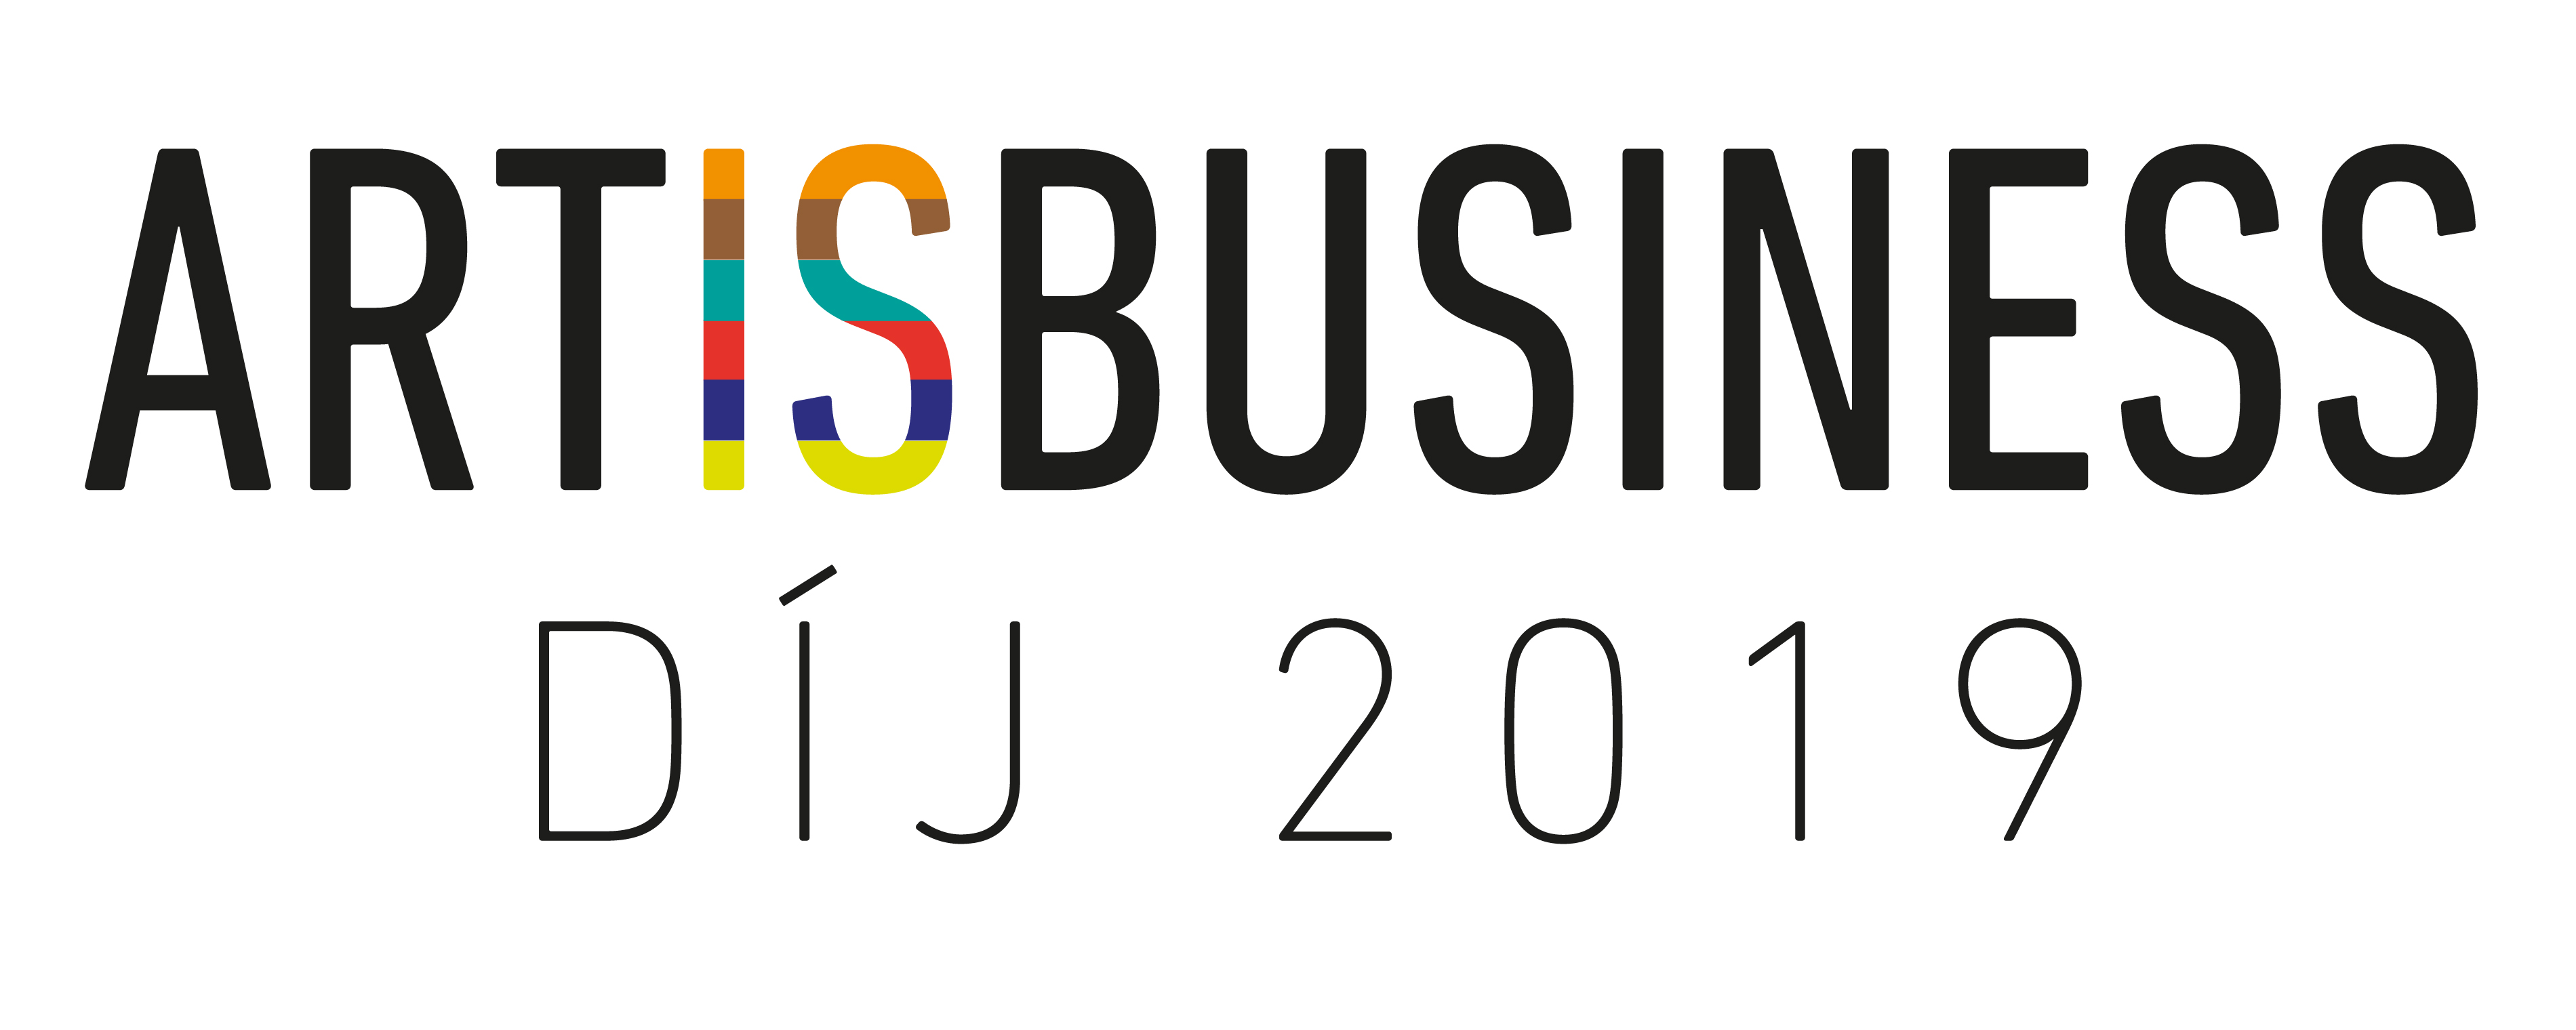 art-is-business_dij2019_logo.jpg